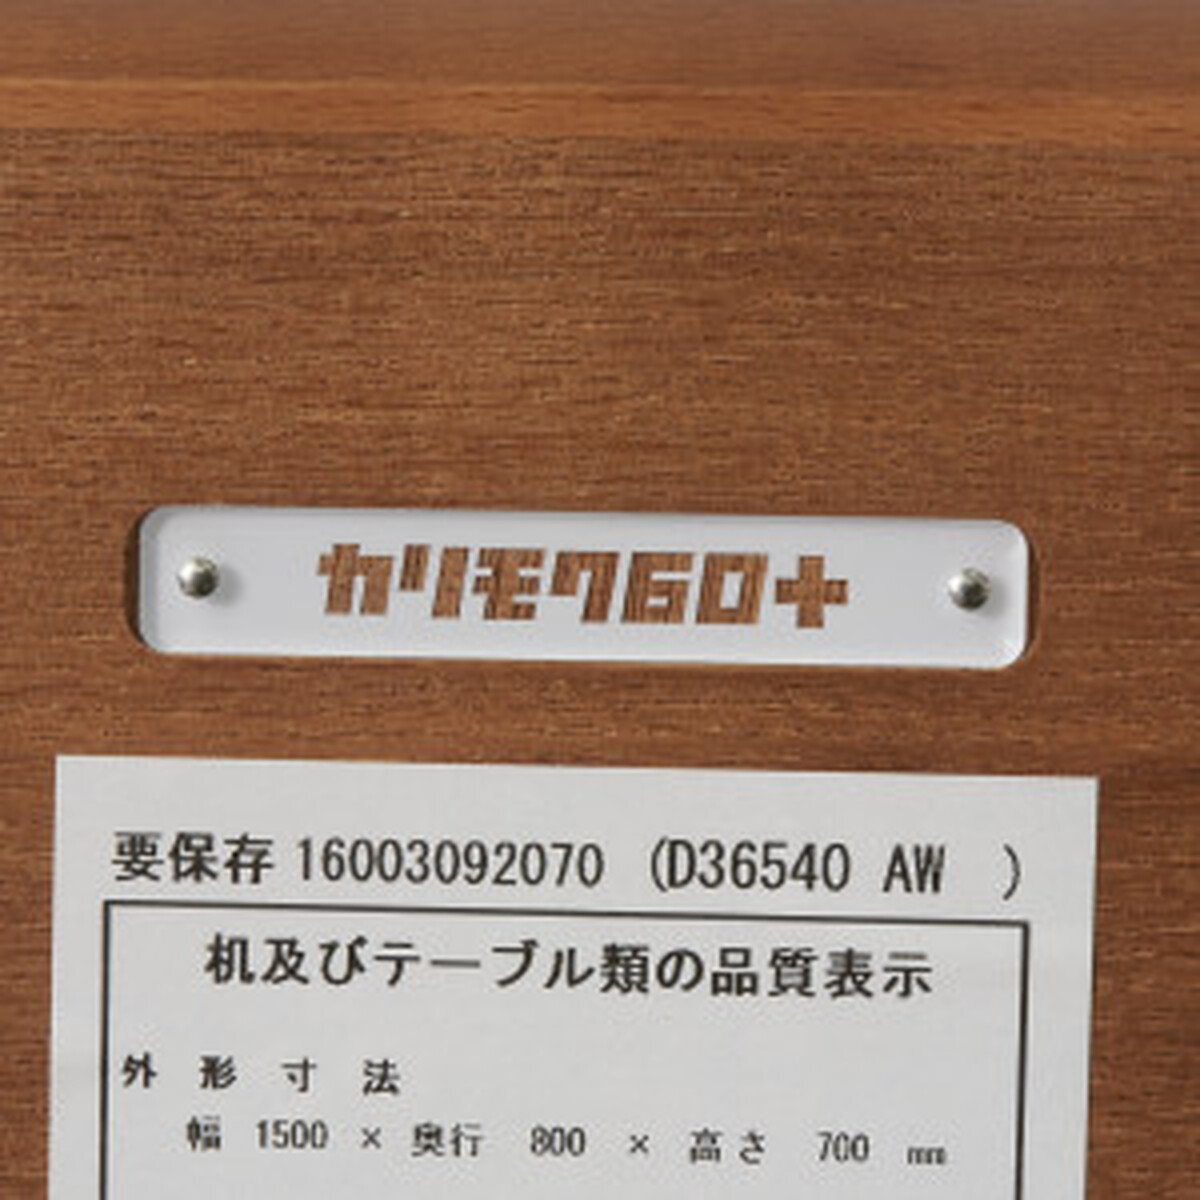 IZ79801N★カリモク60 + ダイニングテーブル 1500 オーク 北欧 スタイル テーブル ウォールナット色 木製 karimoku カリモク 国産_画像8